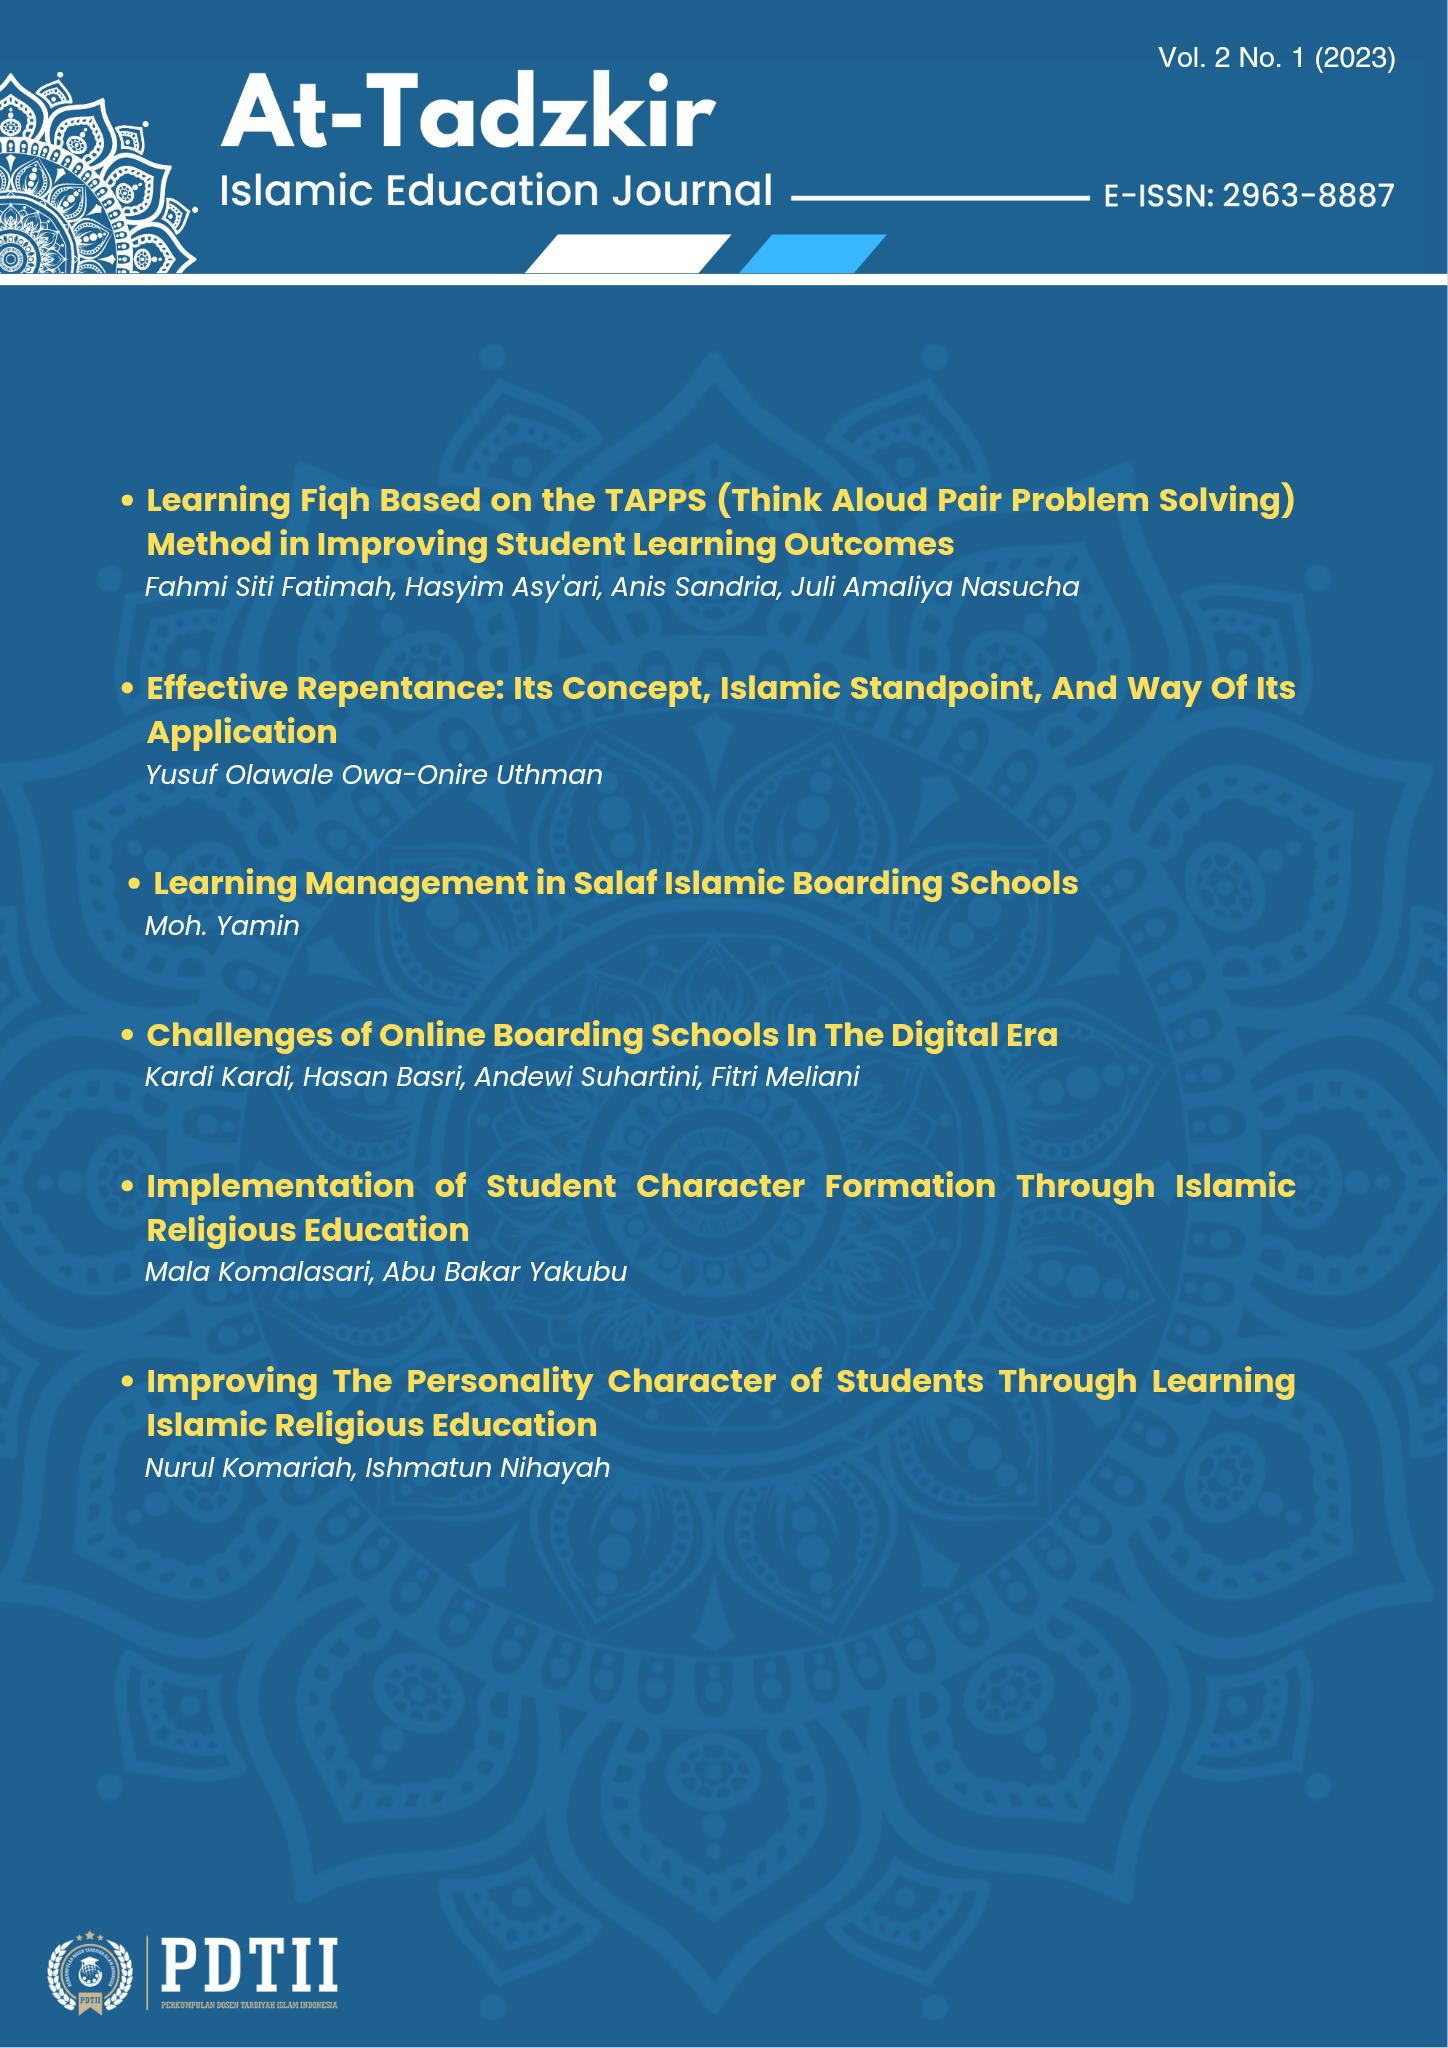 					View Vol. 2 No. 1 (2023): Transformative Islamic Education
				